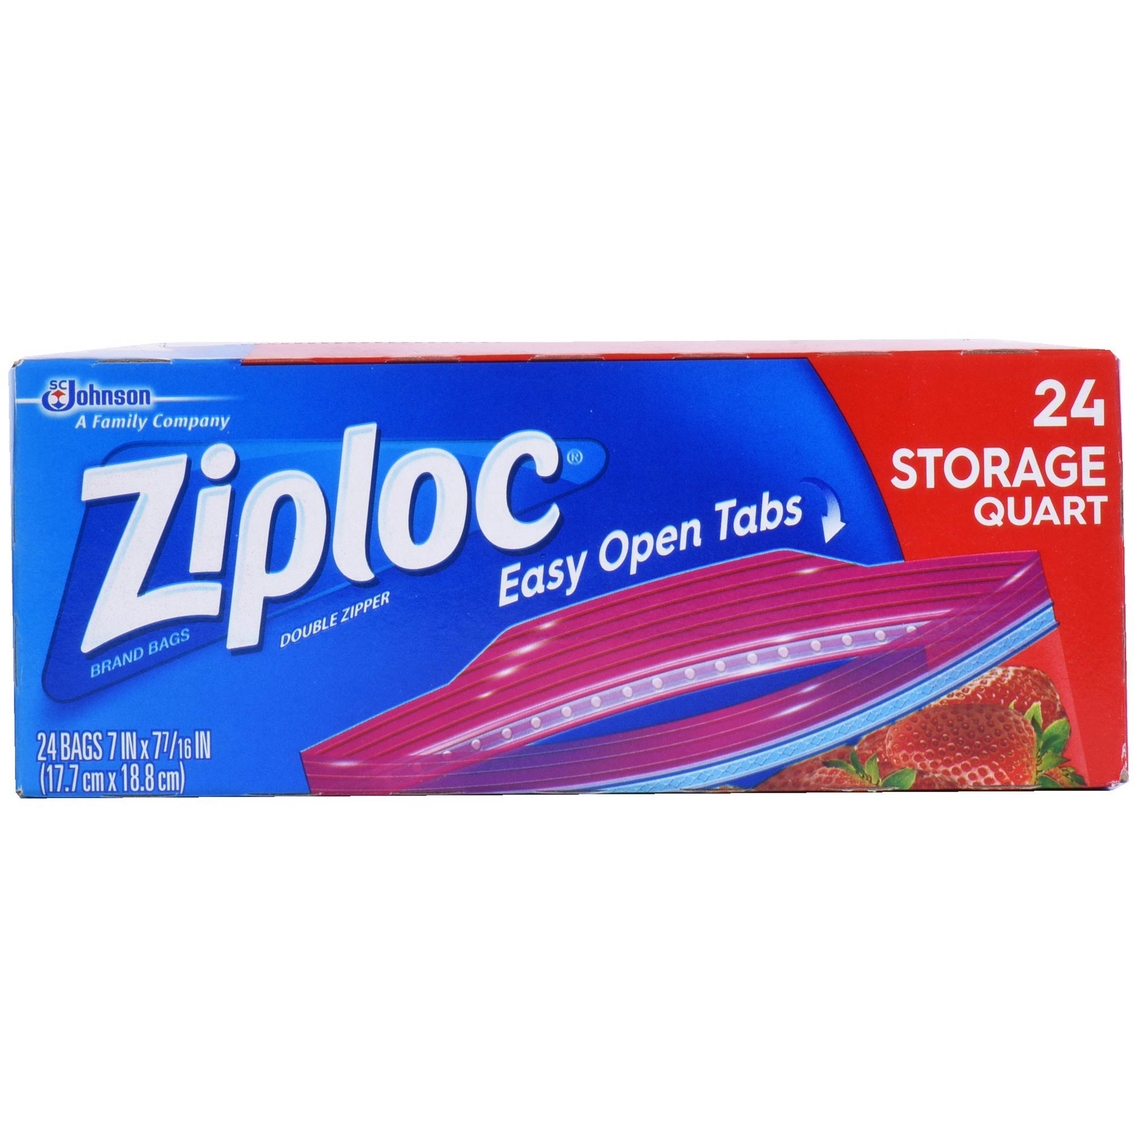 Ziploc Double Zipper Freezer Bag, Quart, 54-count, 4-pack